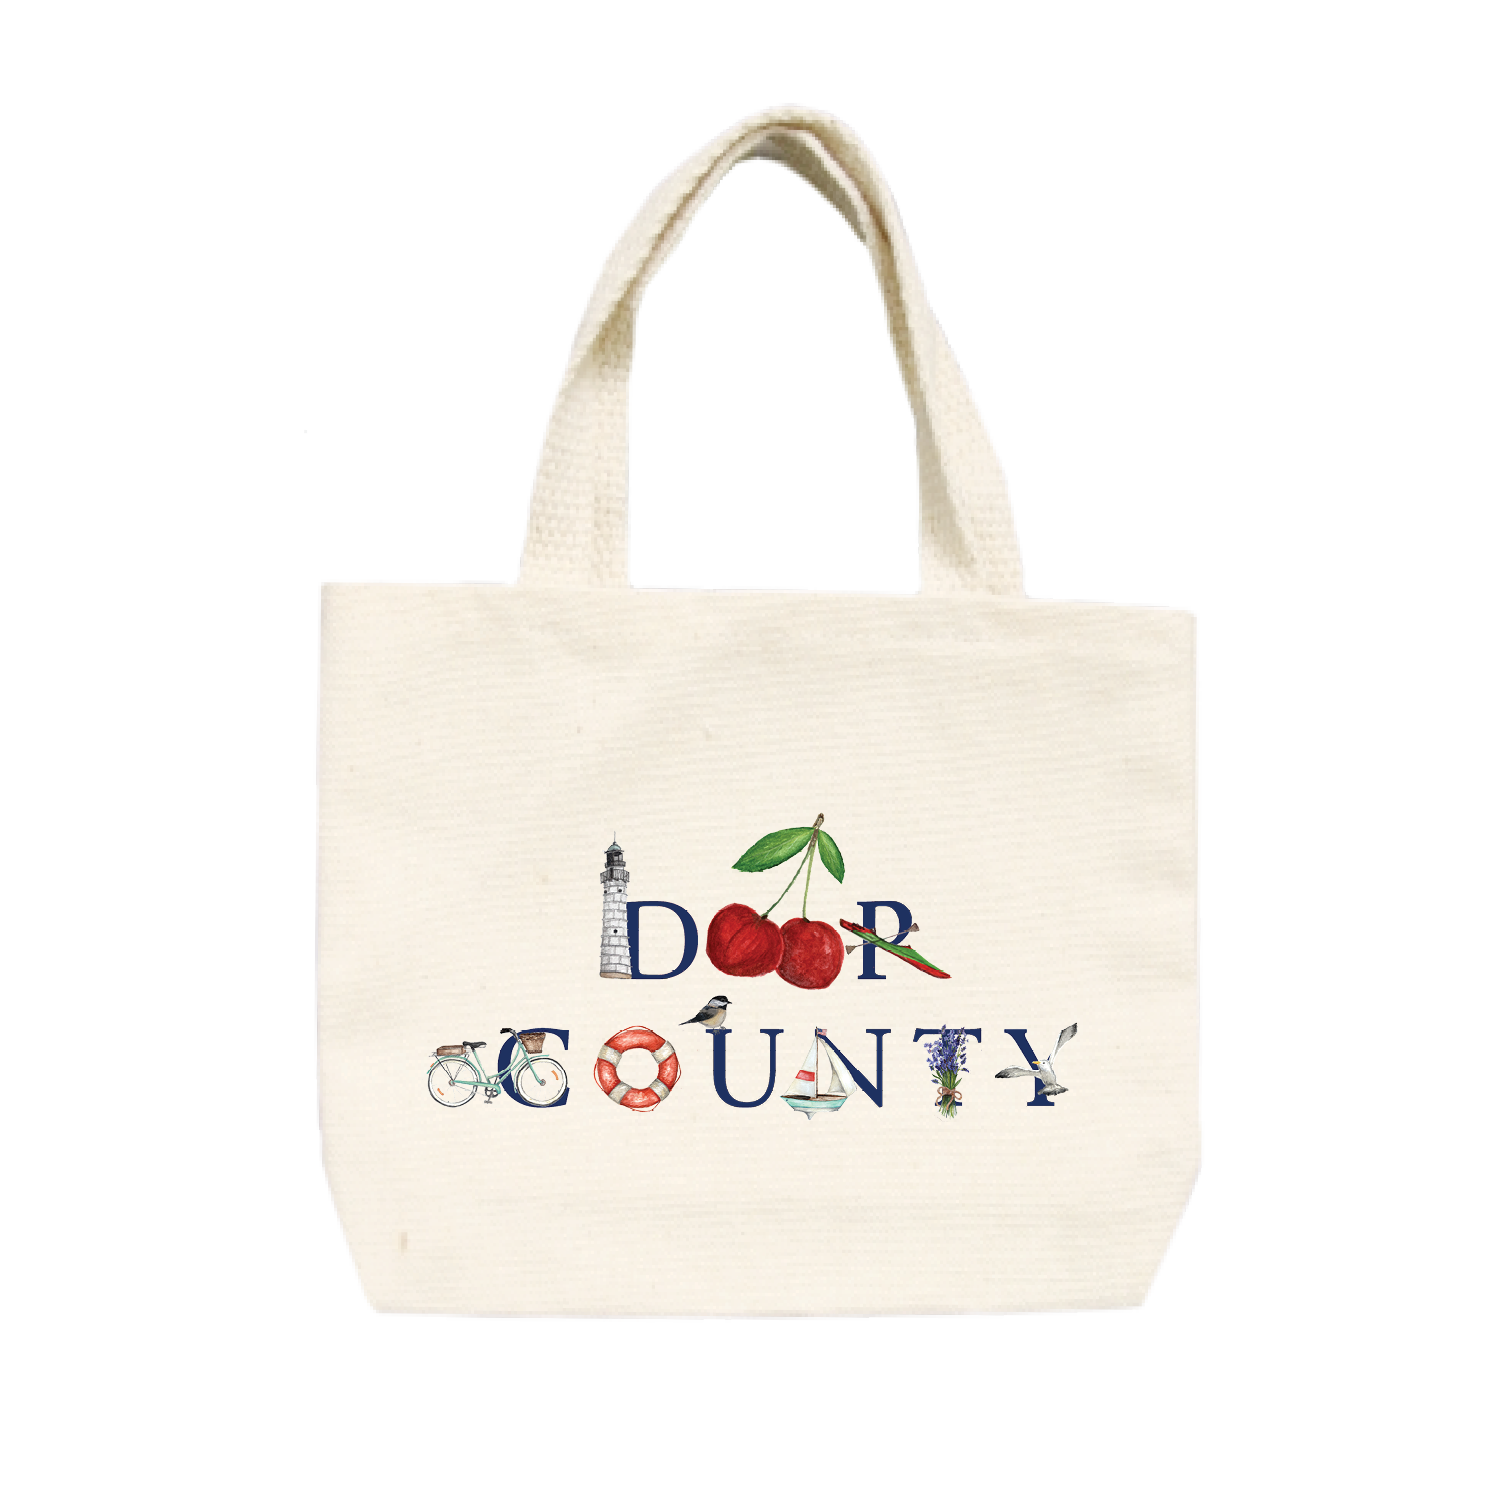 Door County small tote